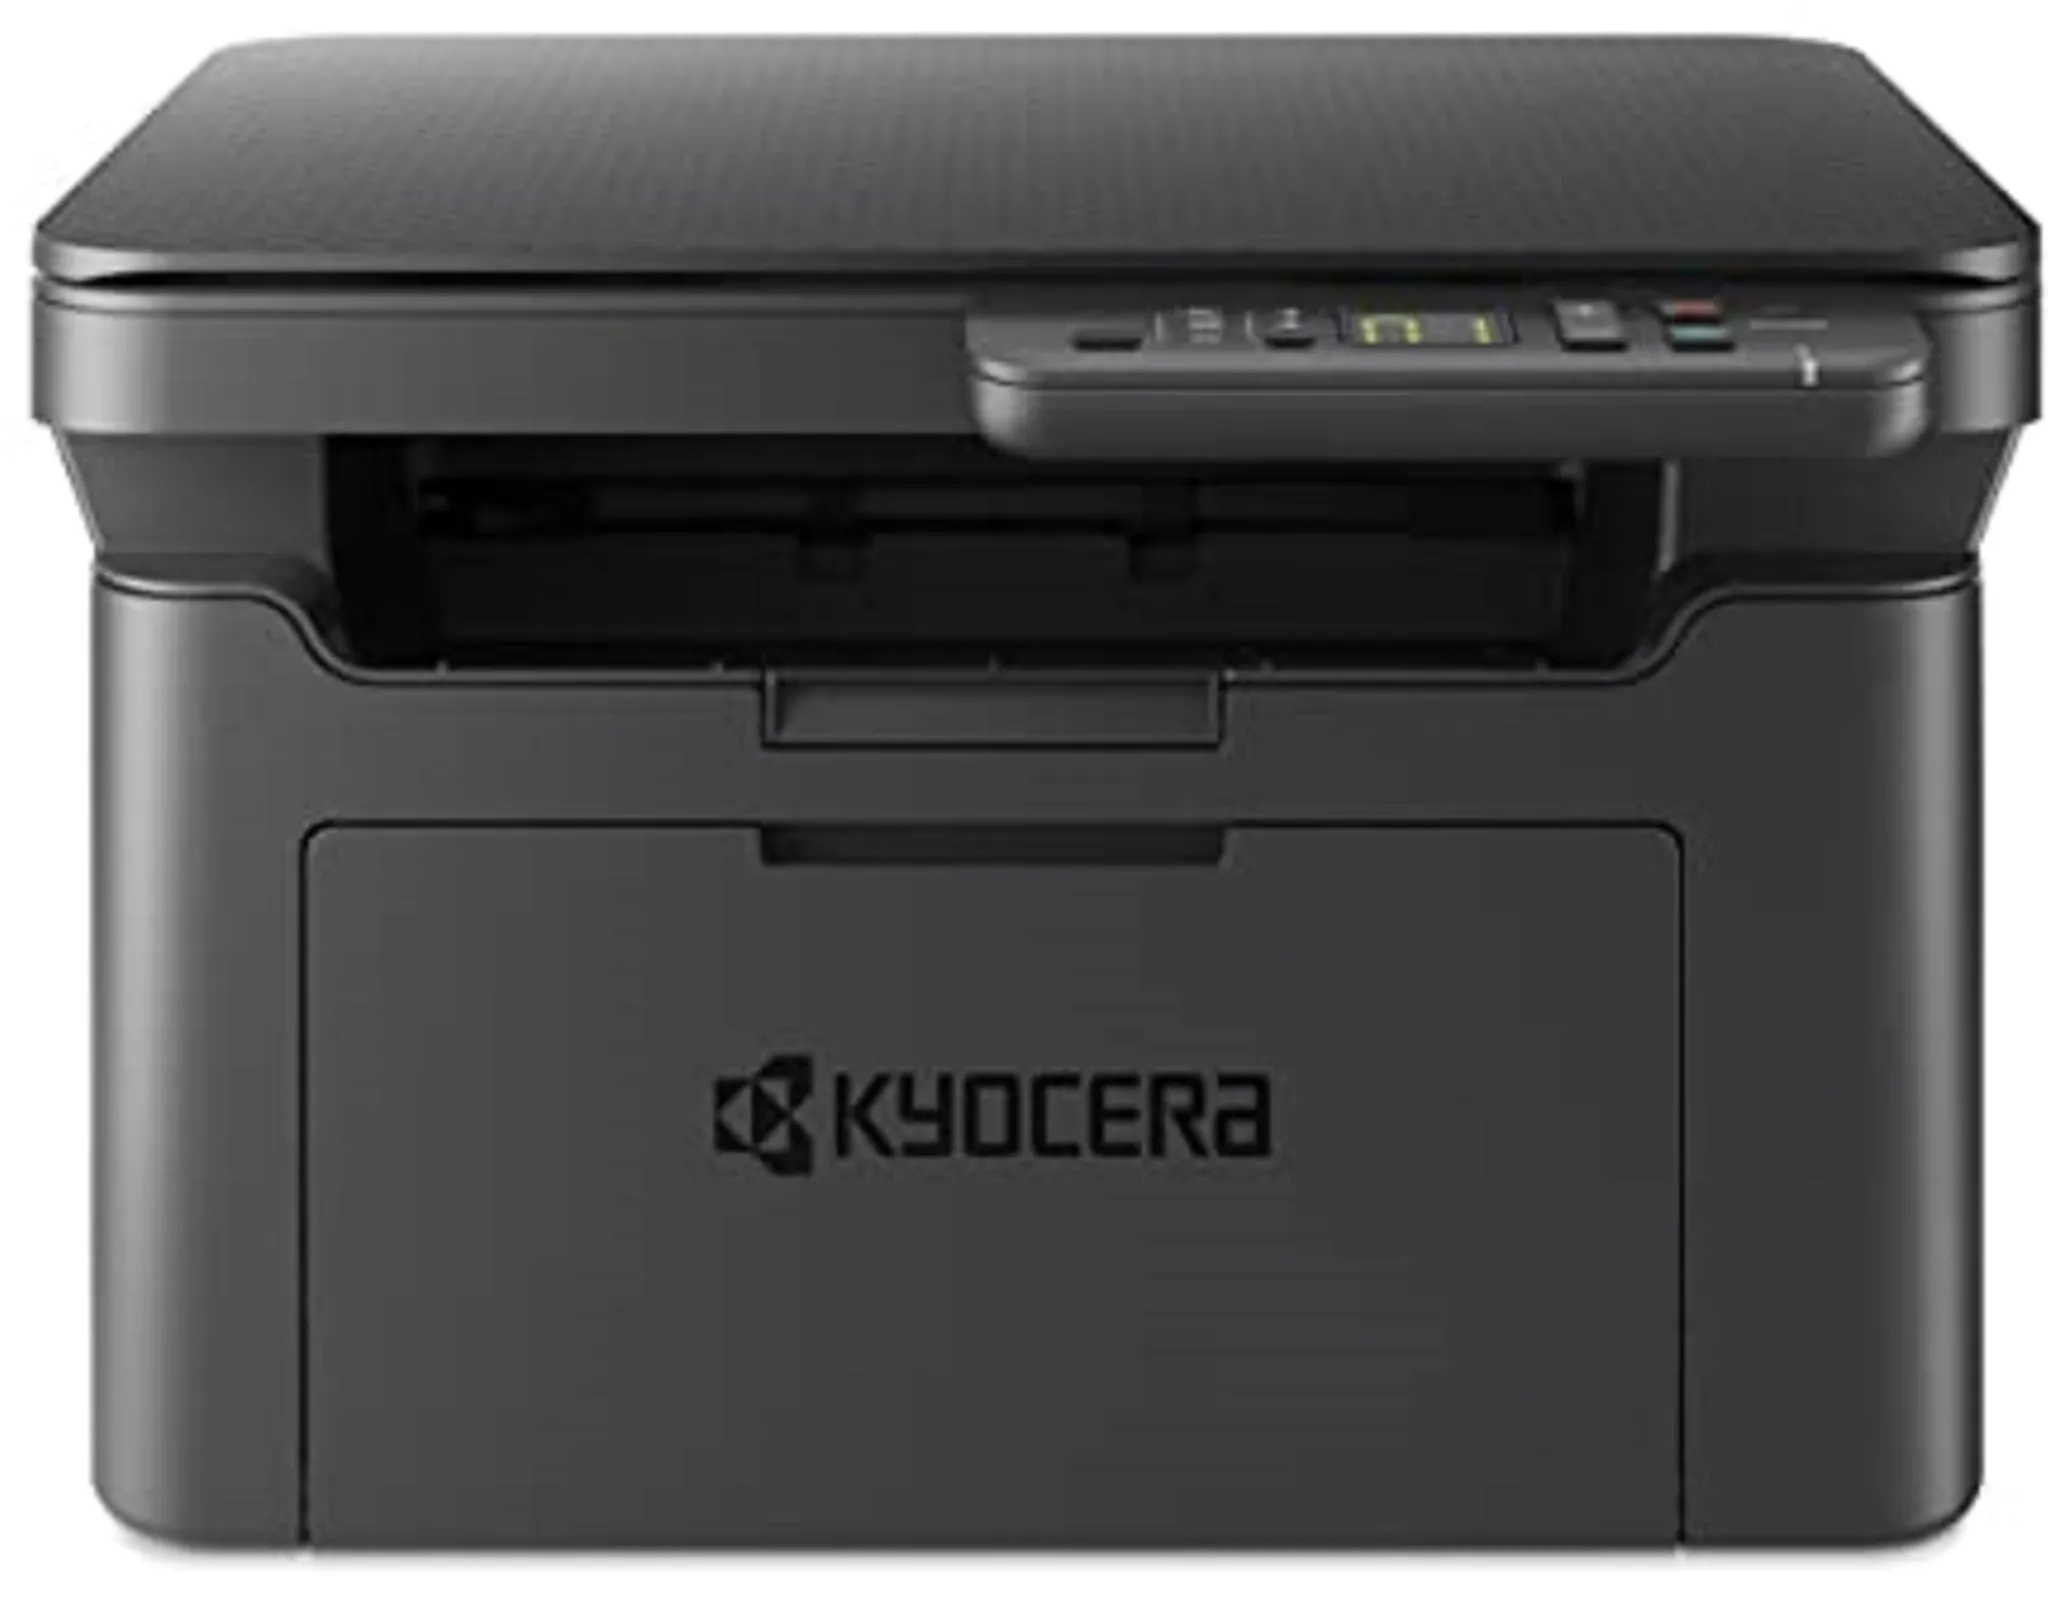 Kyocera MA2001 3-in-1 Laserdrucker Multifunktionsgerät: Drucker Scanner Kopierer. 20 Seiten A4 pro Minute. USB 2.0, 1.200 dpi, Scanfunktion nicht kompatibel mit Apple IOS